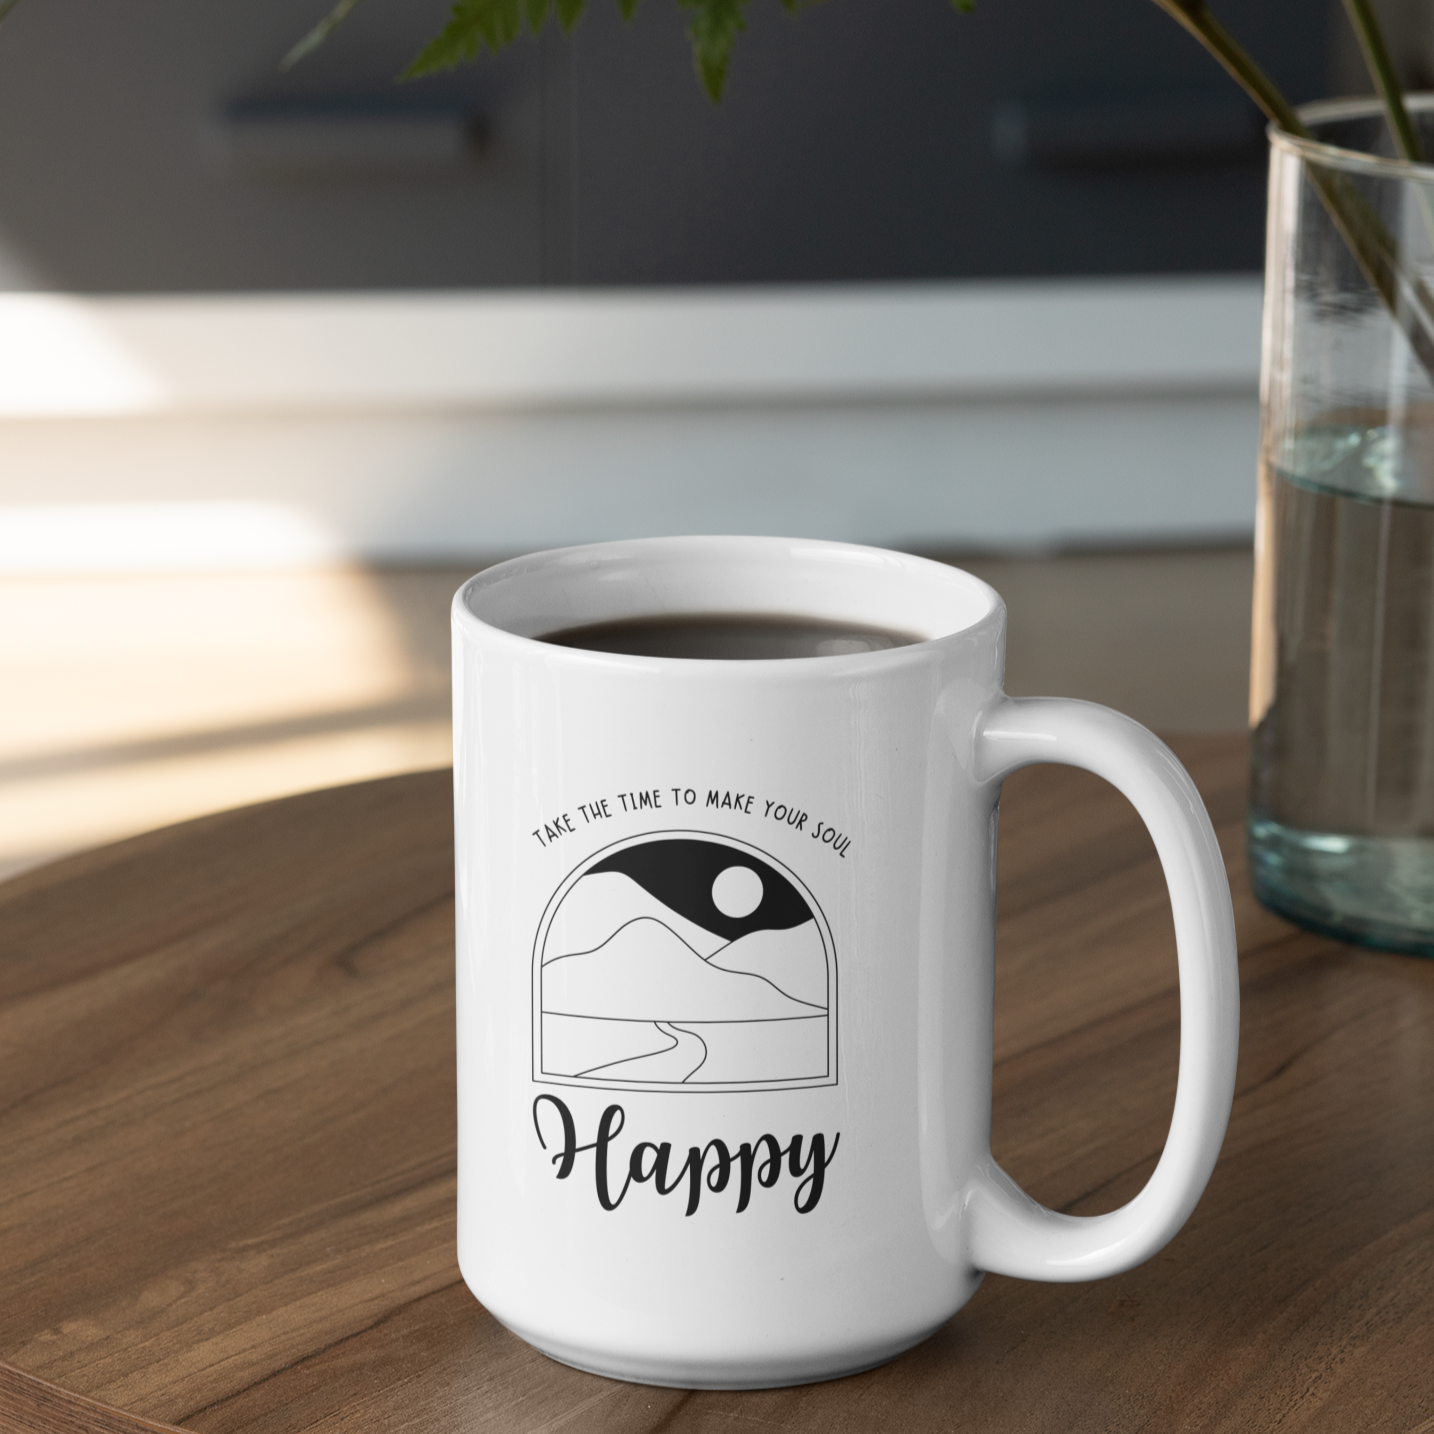 Make Your Soul Happy Mug